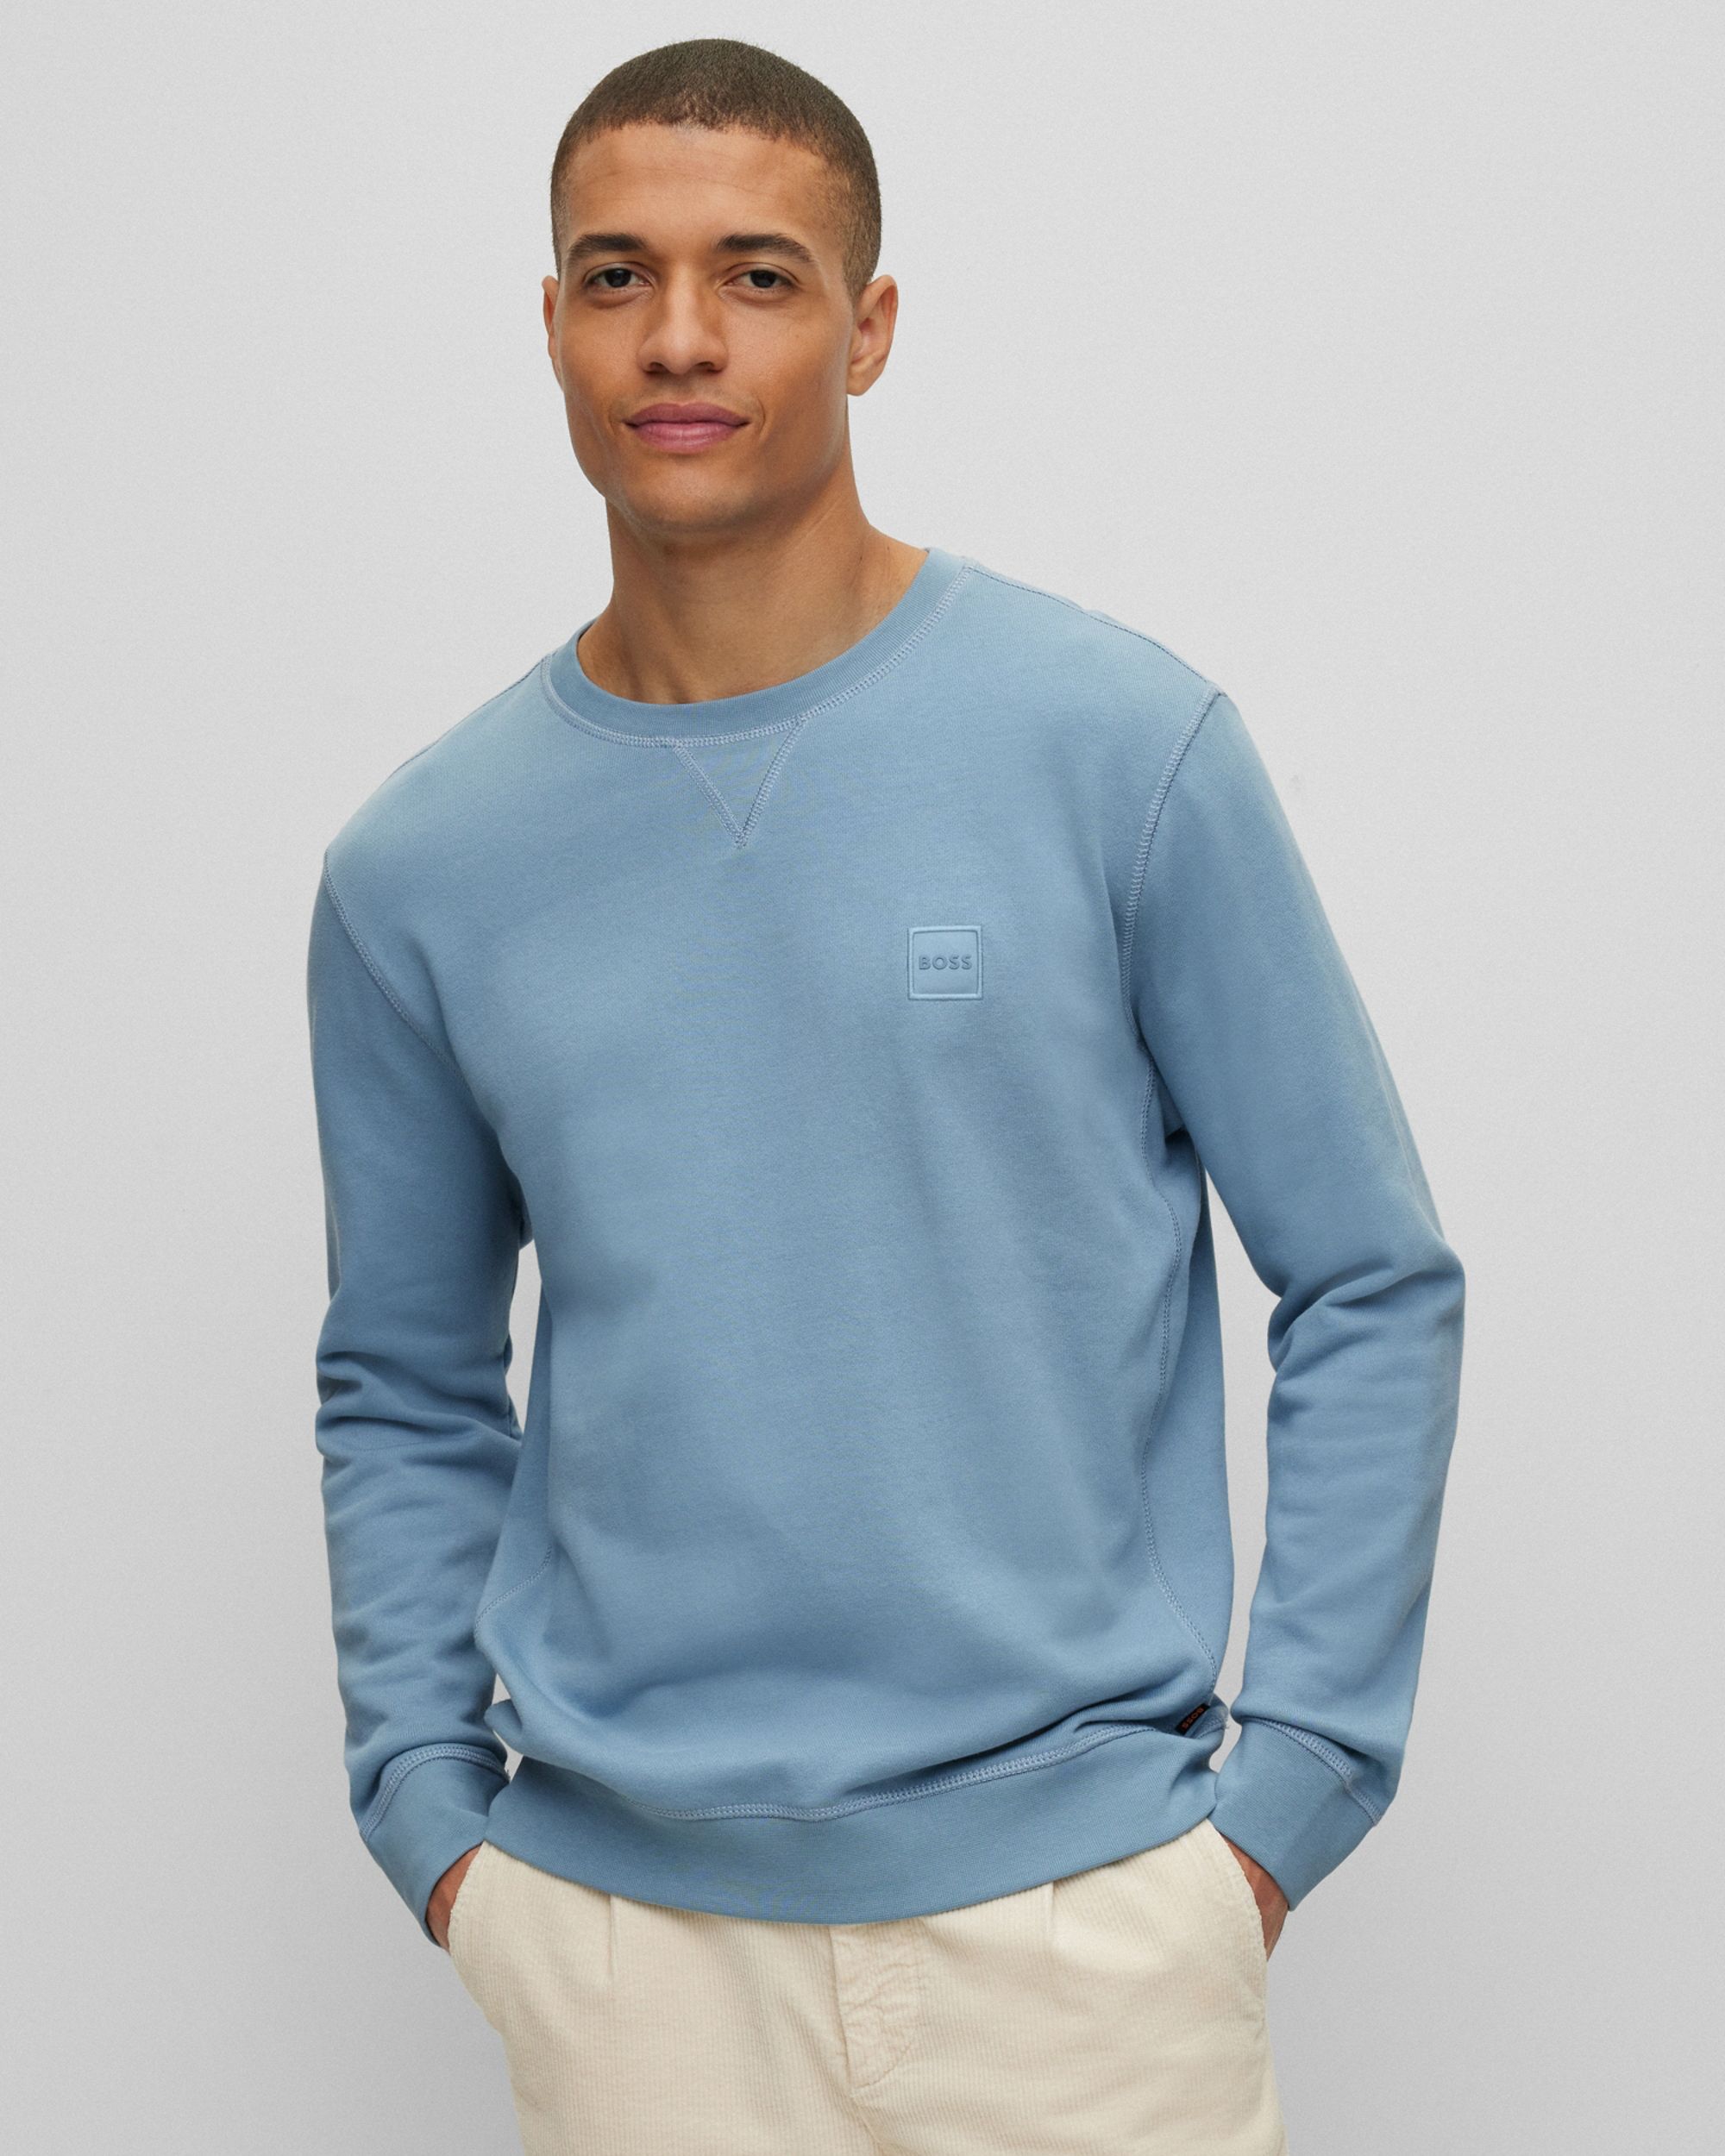 Hugo Boss Casual Westart Sweater Licht blauw 082288-001-L